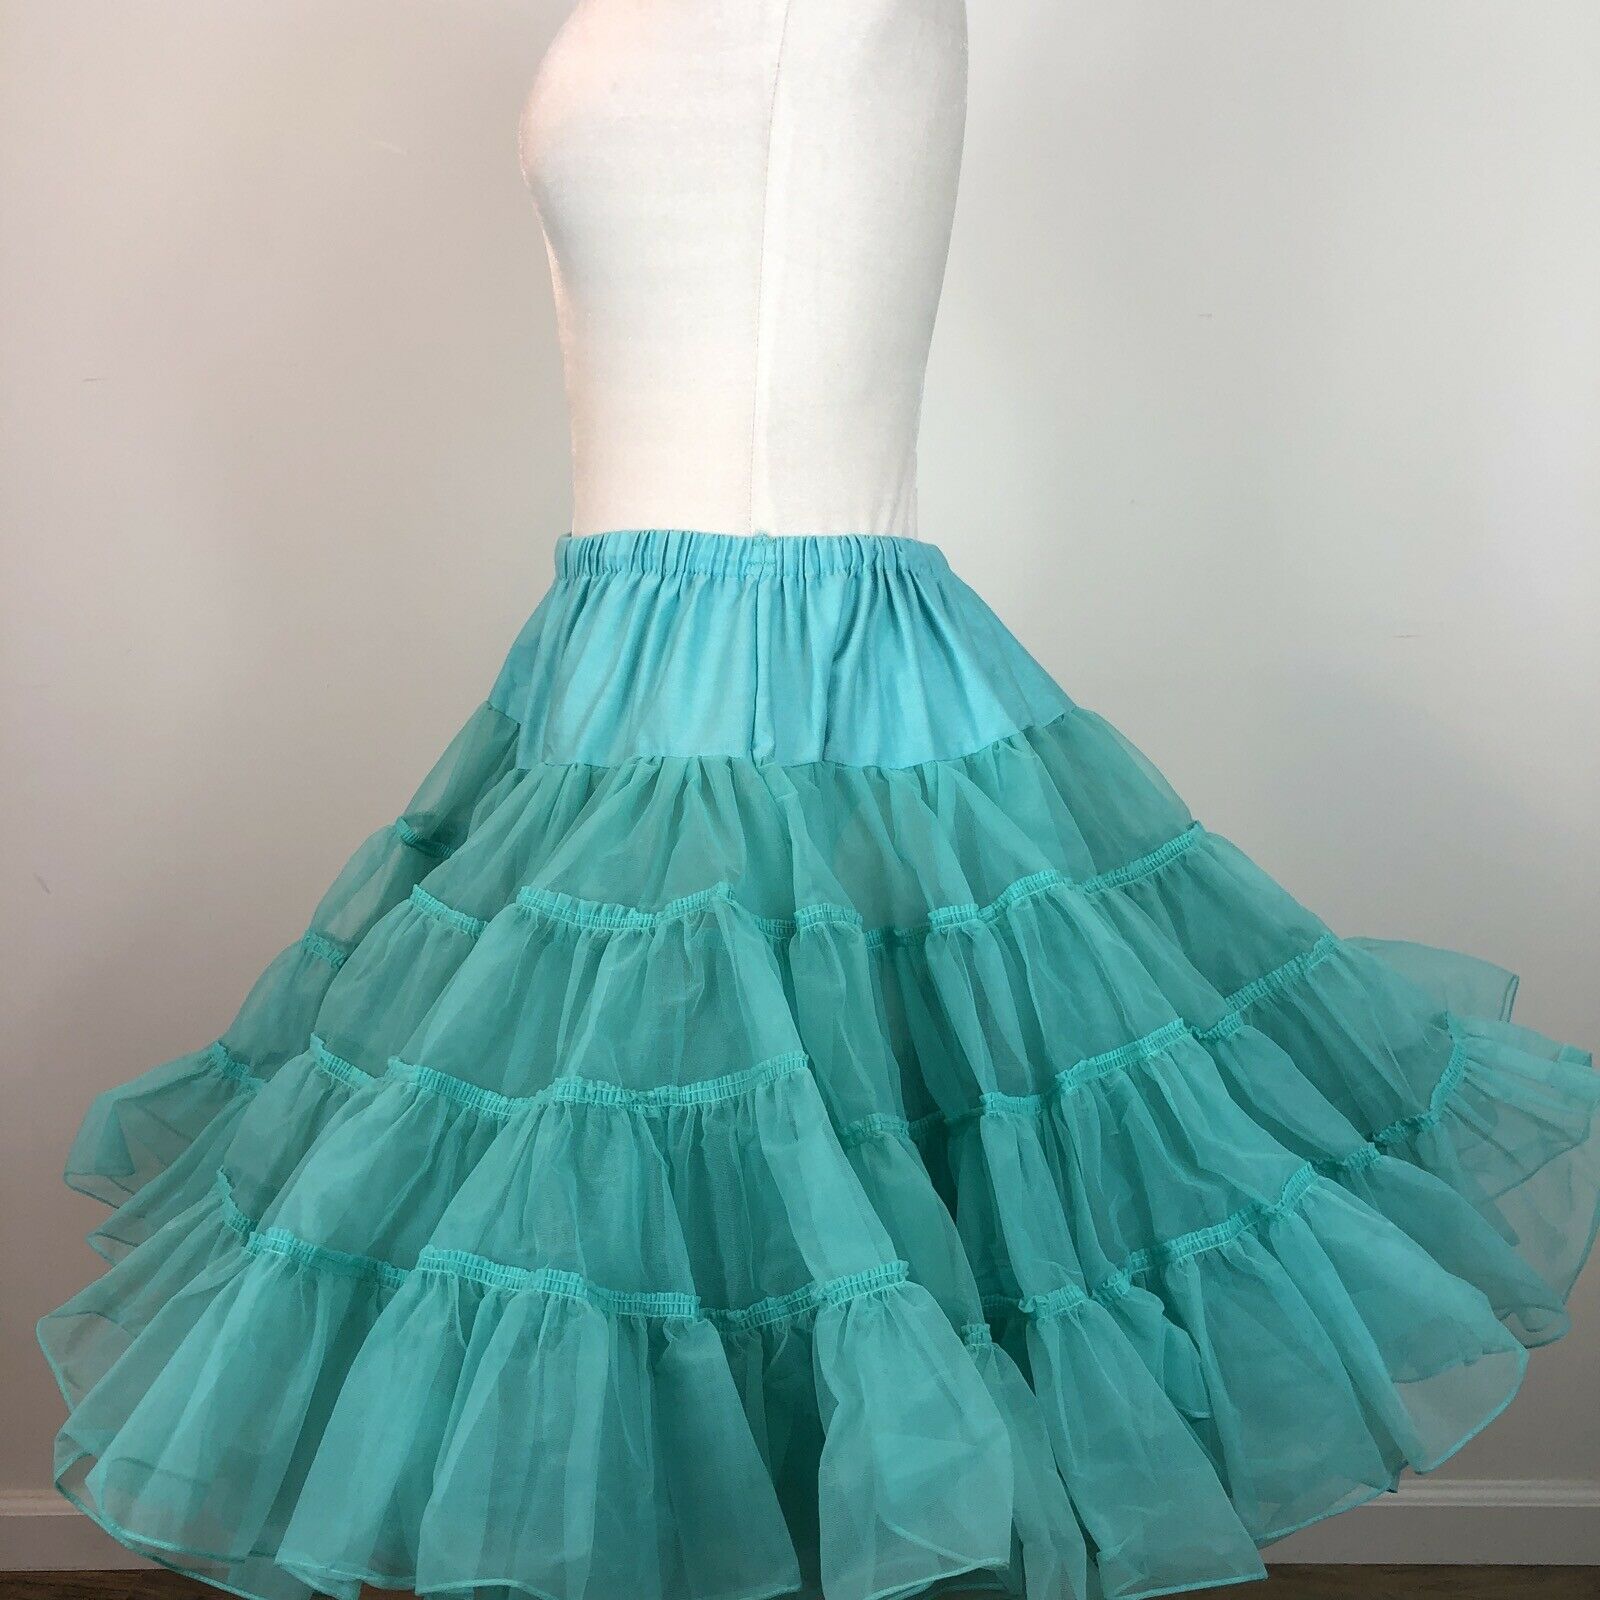 Square Dance Petticoat Turquoise Sam’s #660 Size S 2 Full Layers 21”